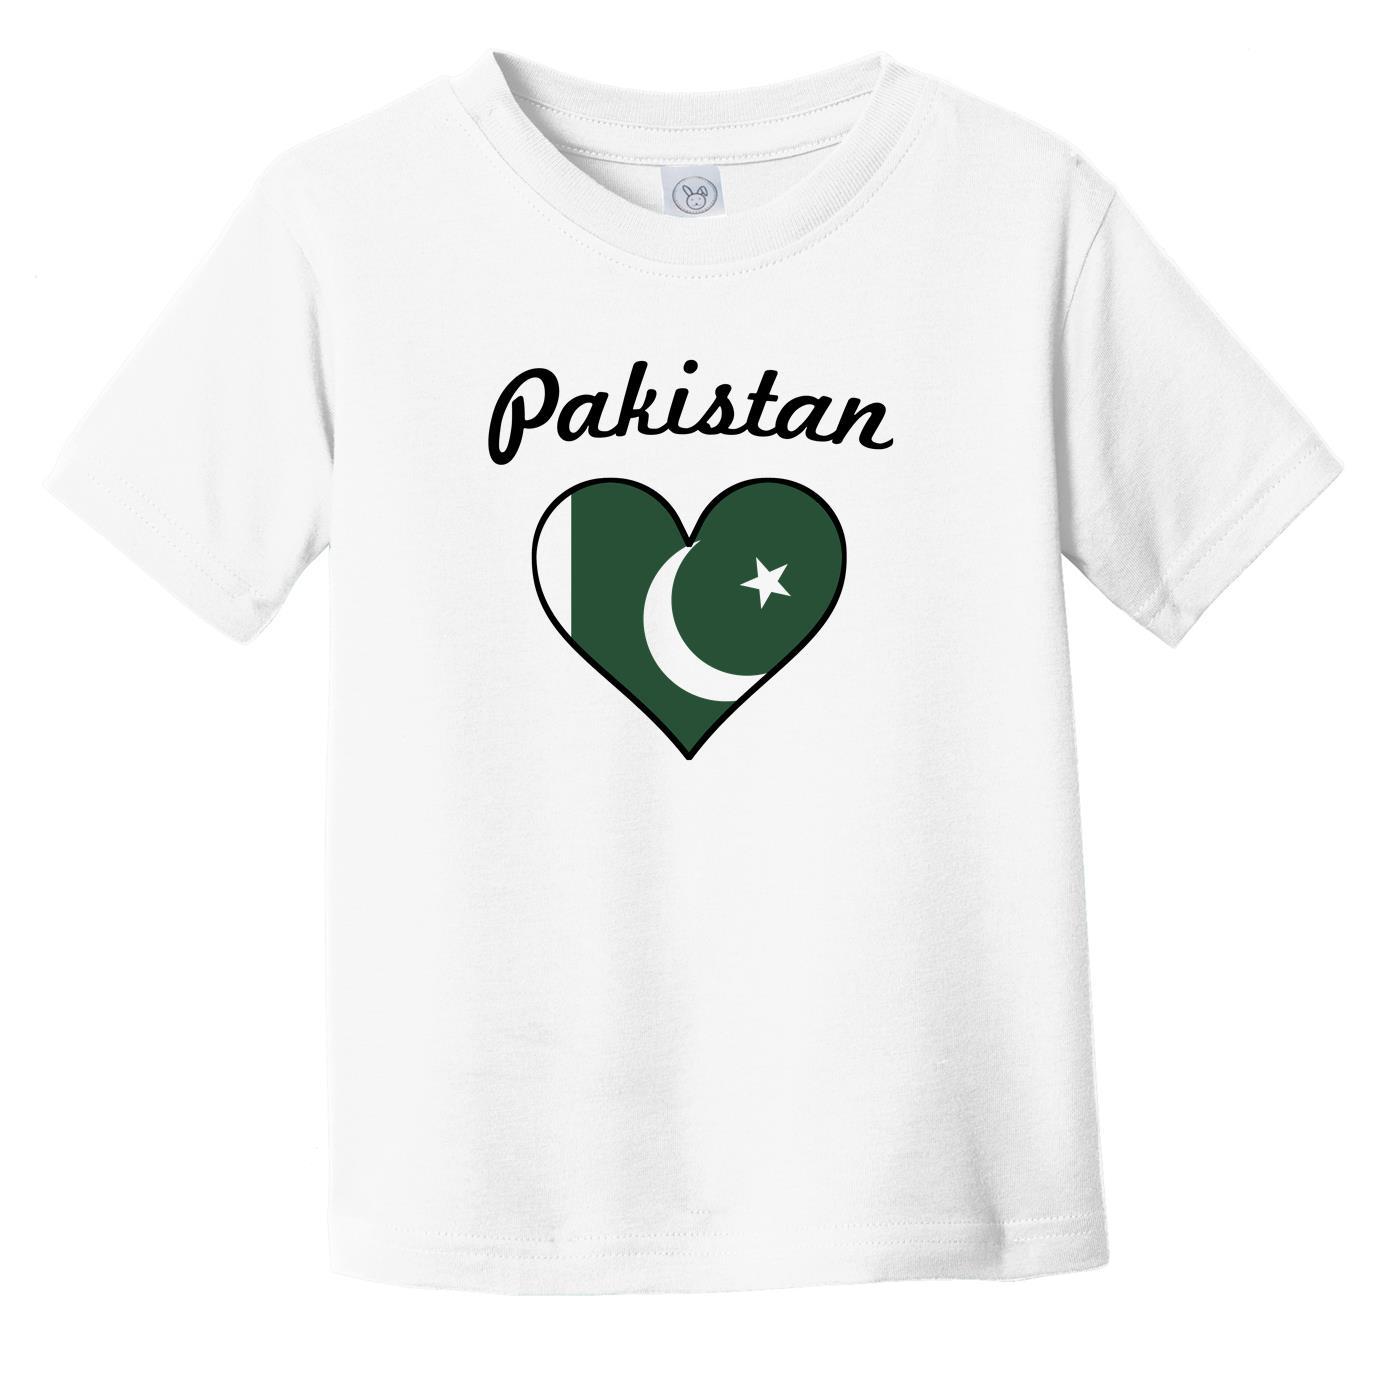 Pakistani Flag Heart Infant Toddler T-Shirt